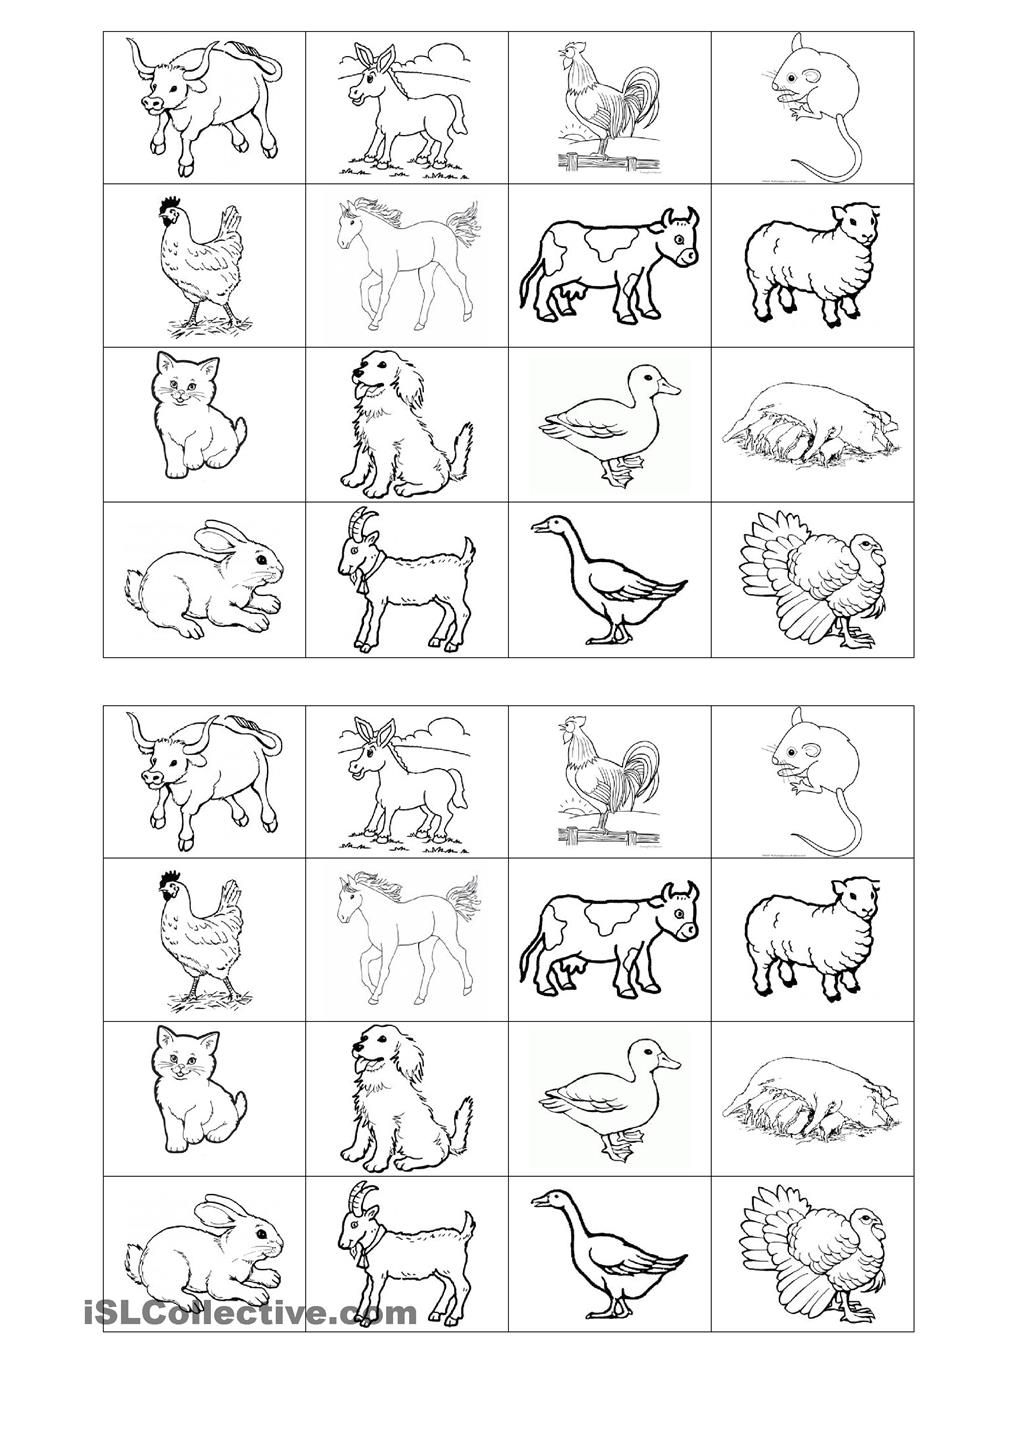 Memory Game On Farm Animals | Free Esl Printable Worksheets - Free Printable Memory Exercises